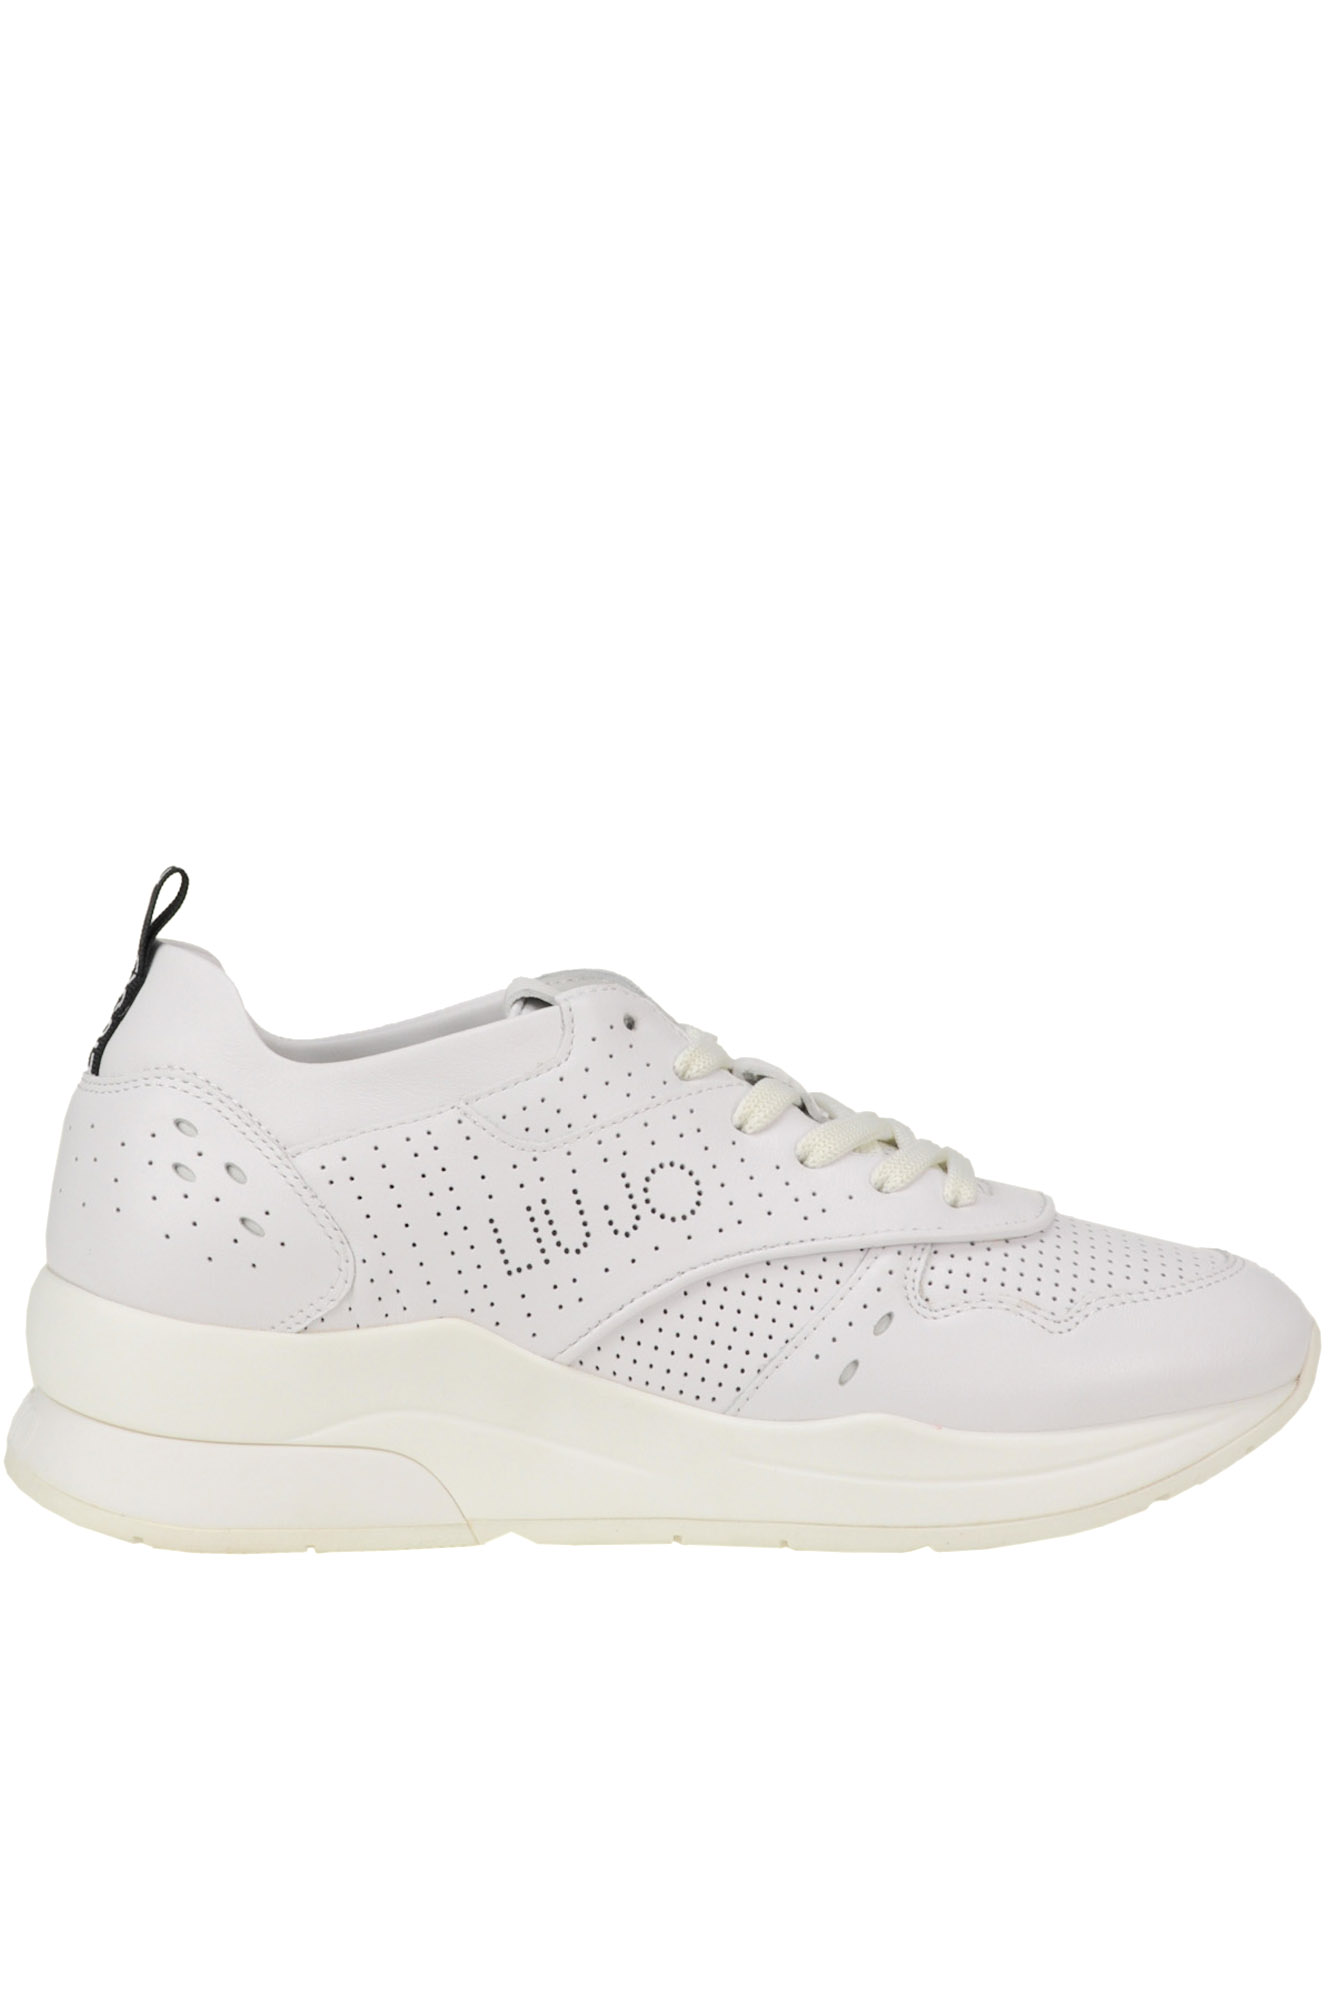 Liu •jo Karlie Sneakers In White